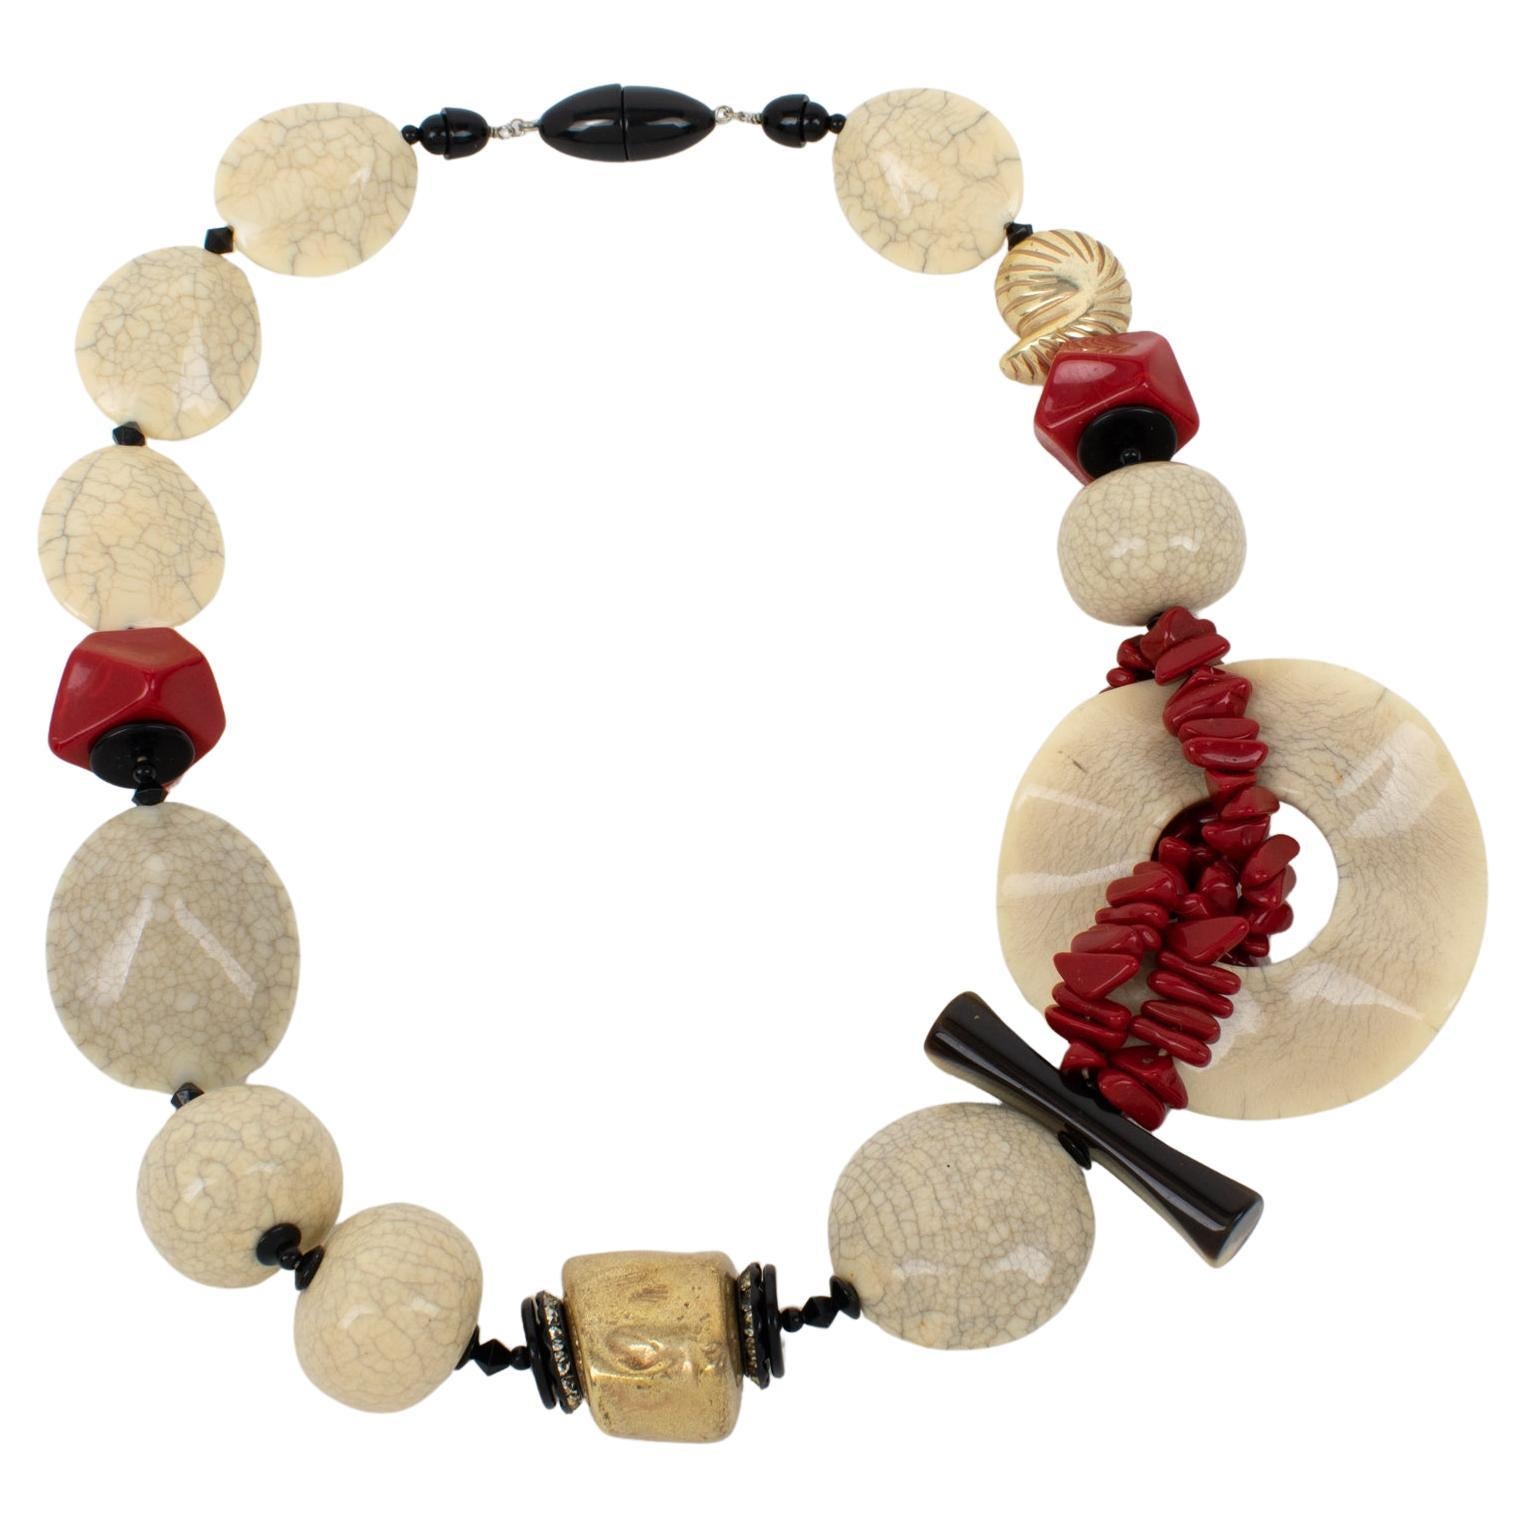 Angela Caputi Japanese Inspired Oversized Resin Necklace with Faux-Ceramic Beads